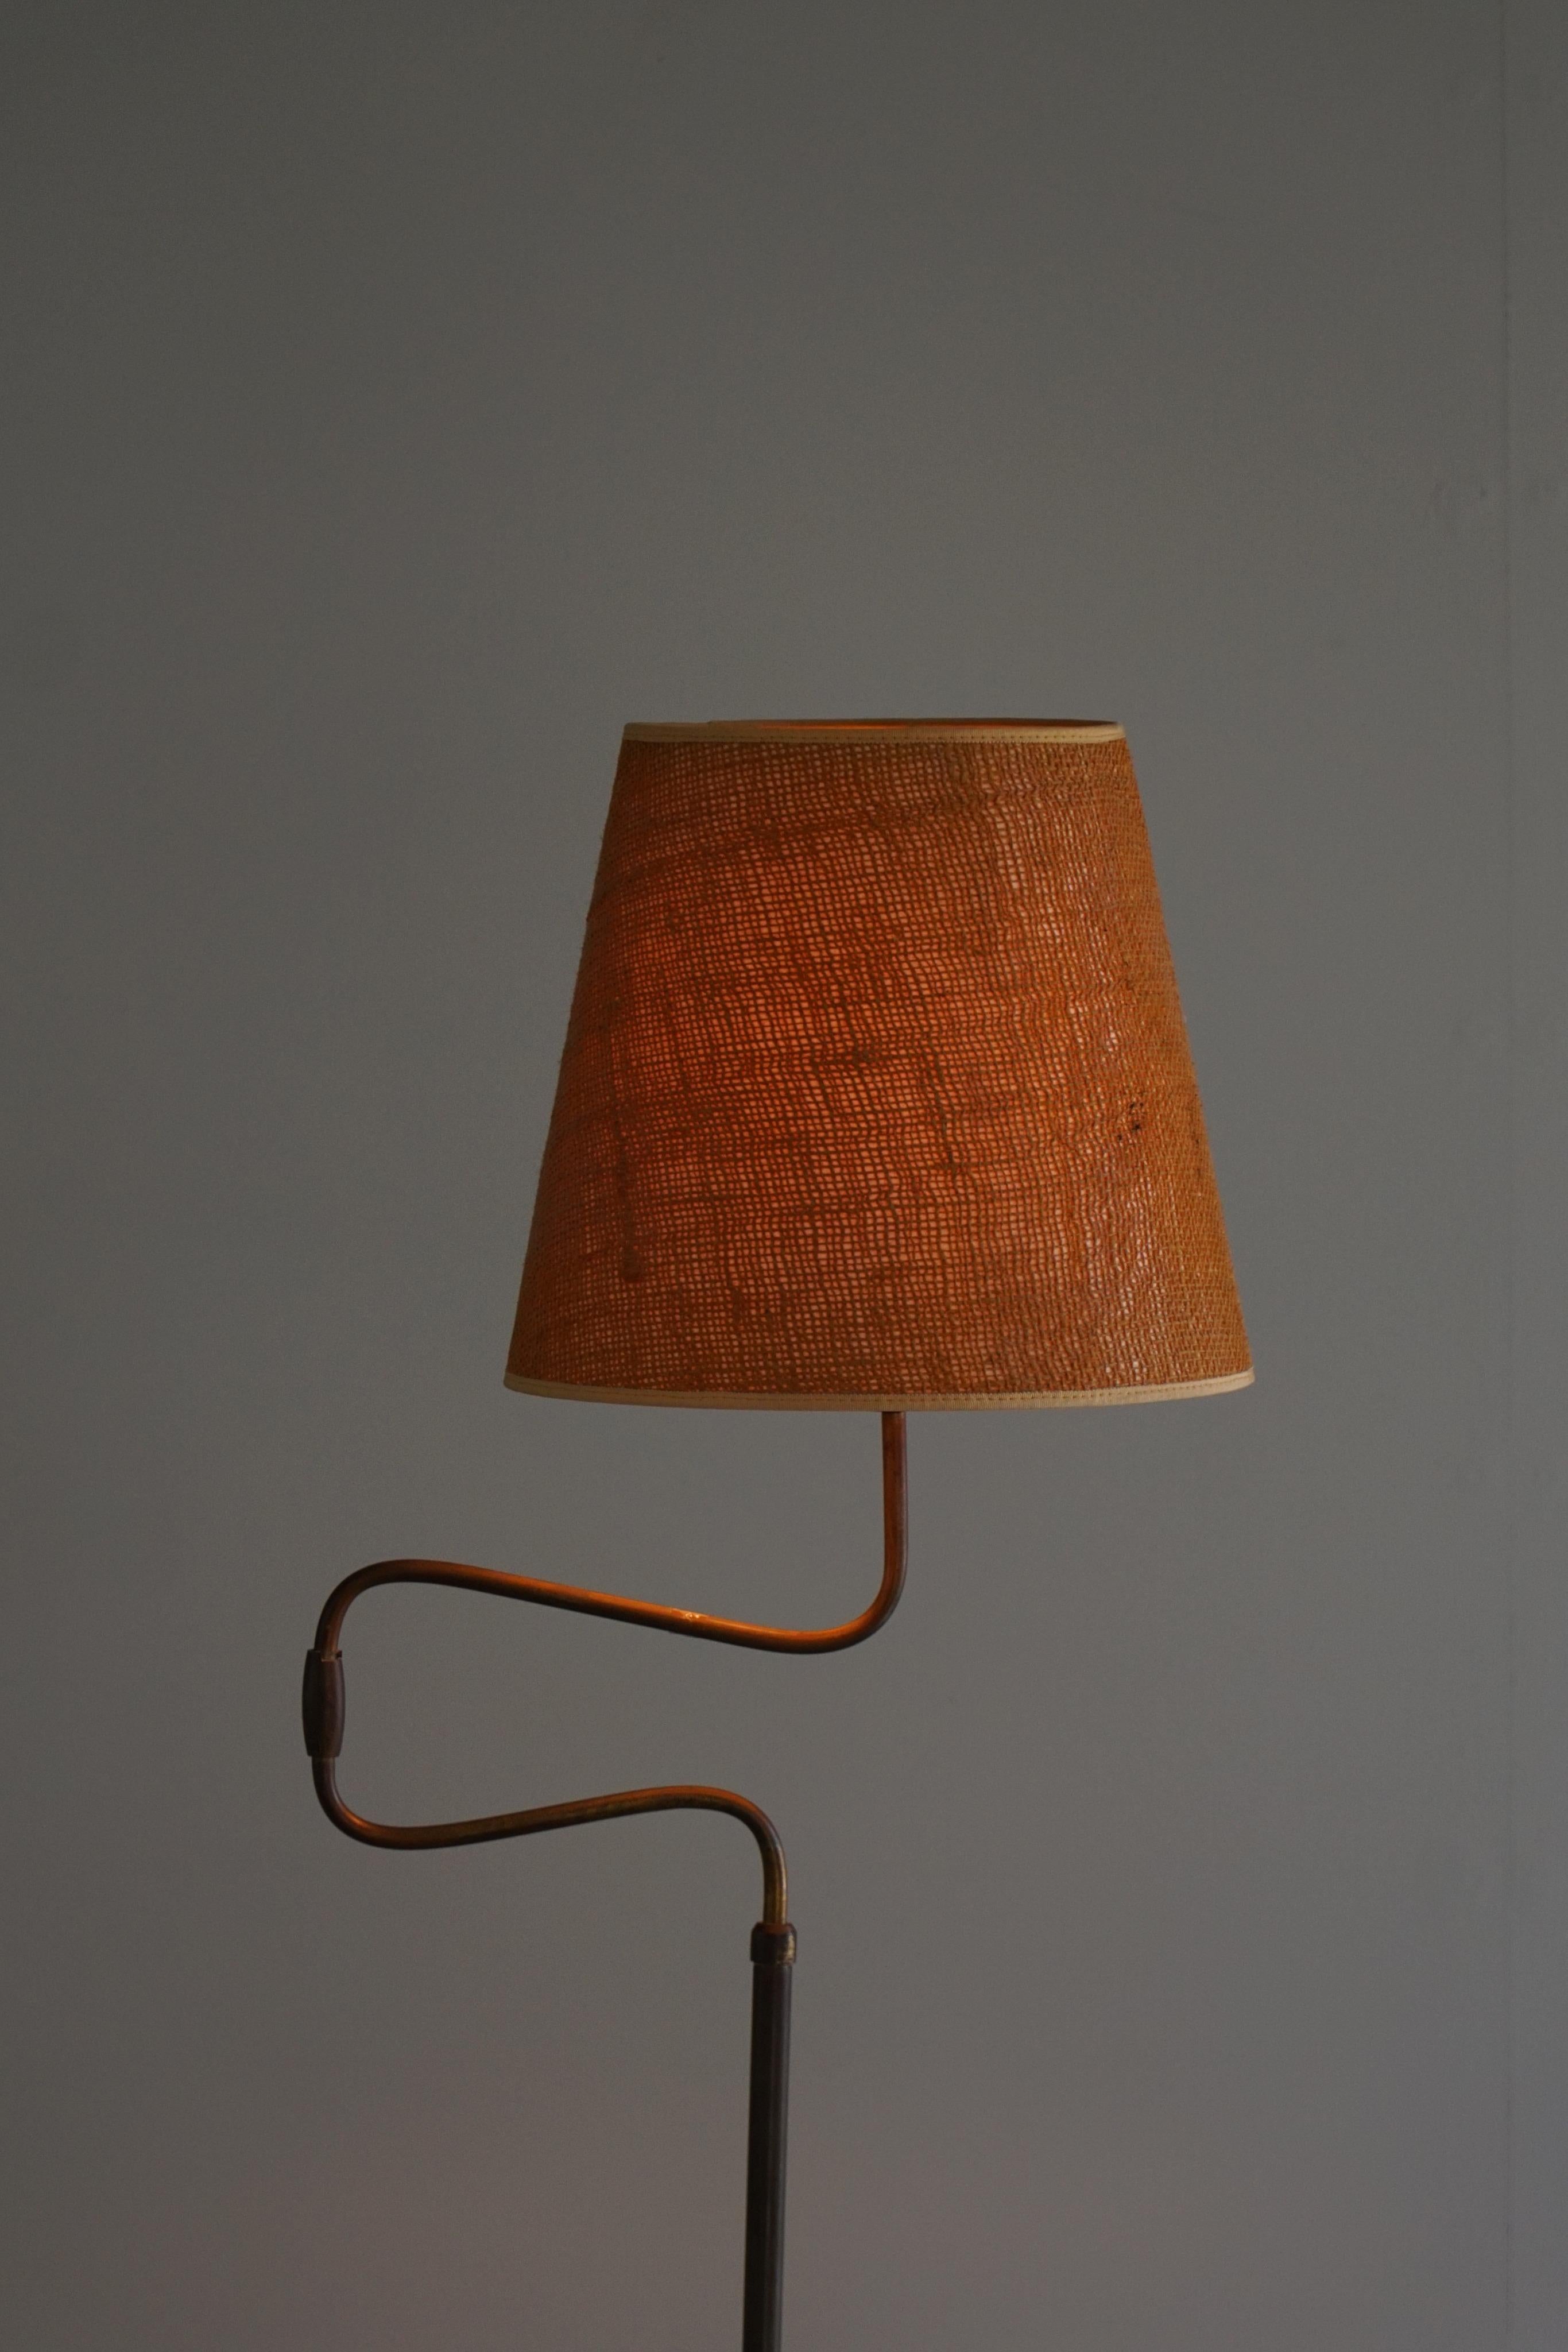 20th Century Danish Modern, Adjustable Swing Arm Floor Lamp in Brass, Midcentury, 1950s